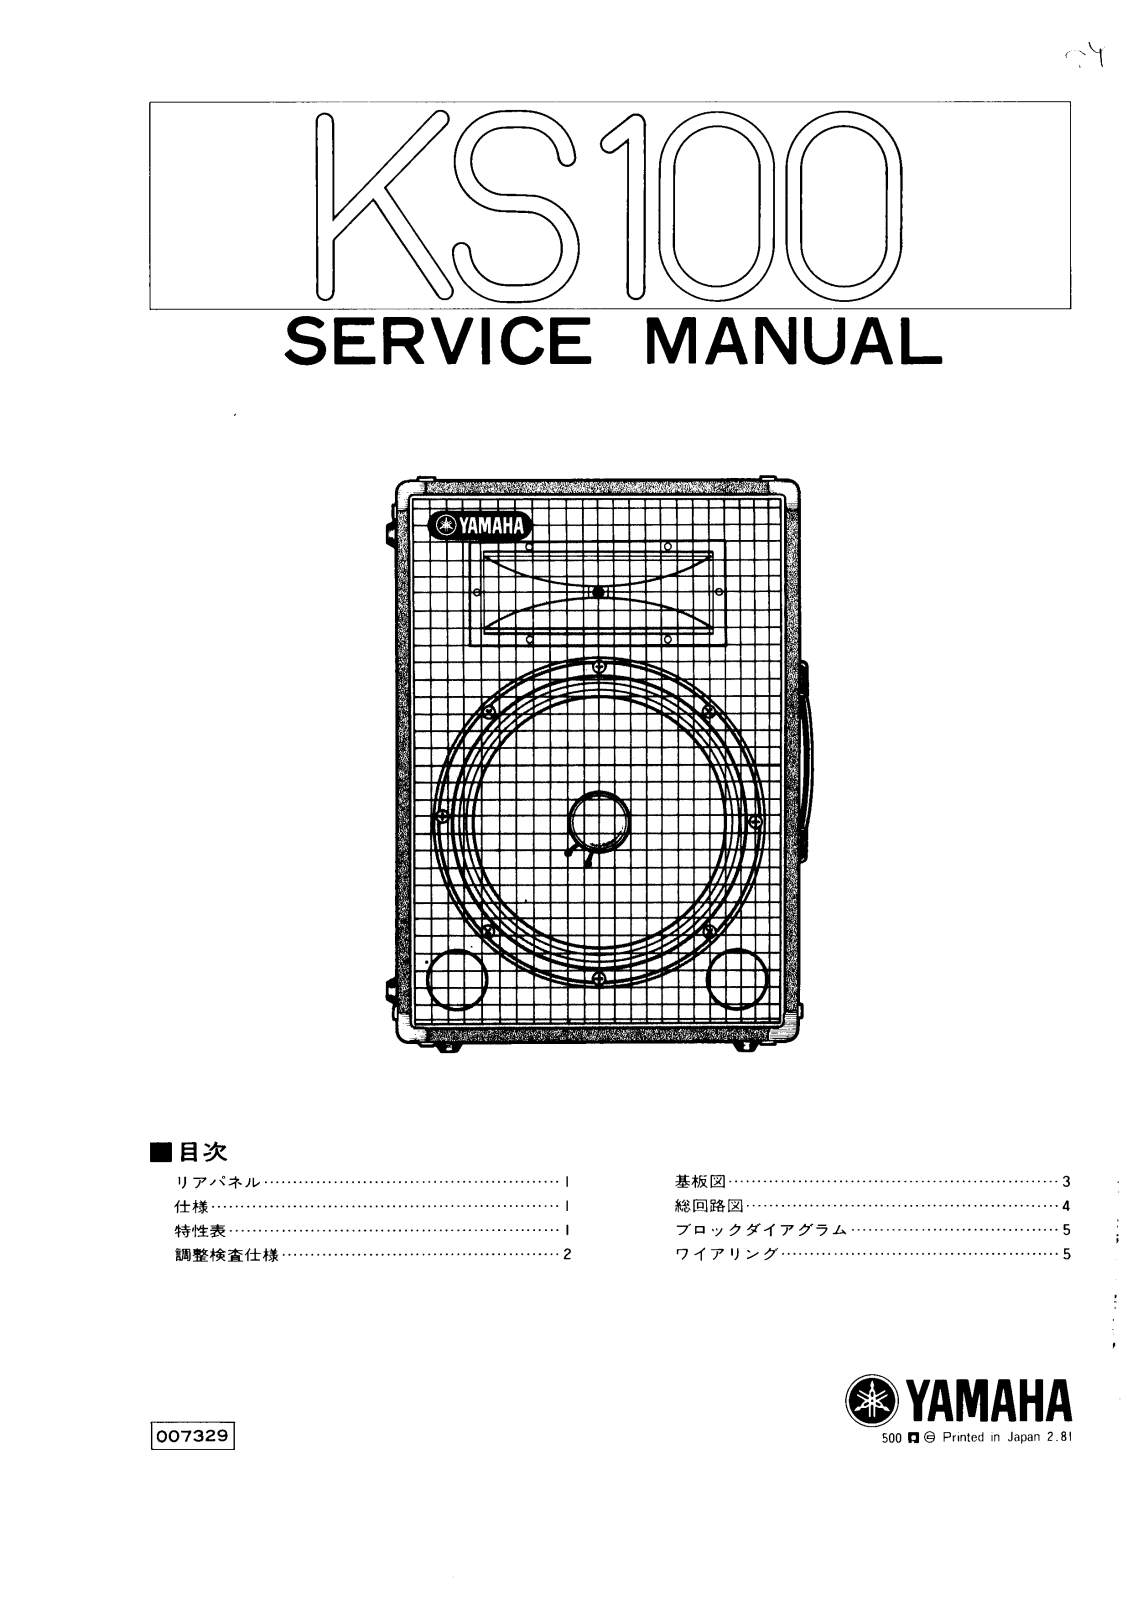 Yamaha KS-100 Service Manual